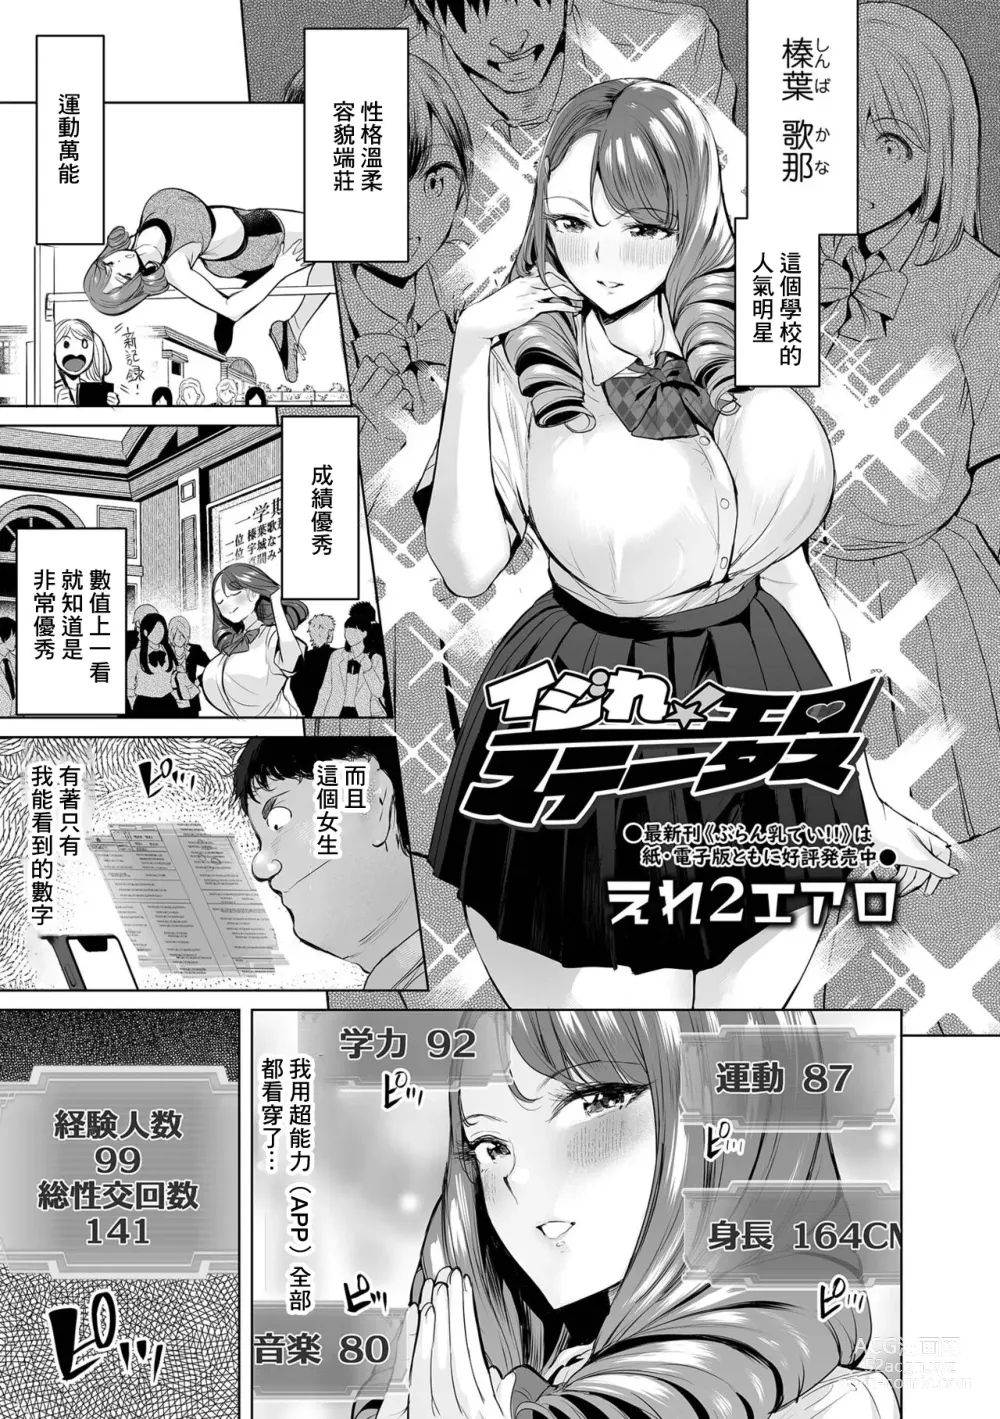 Page 1 of manga Ijire! Ero Status